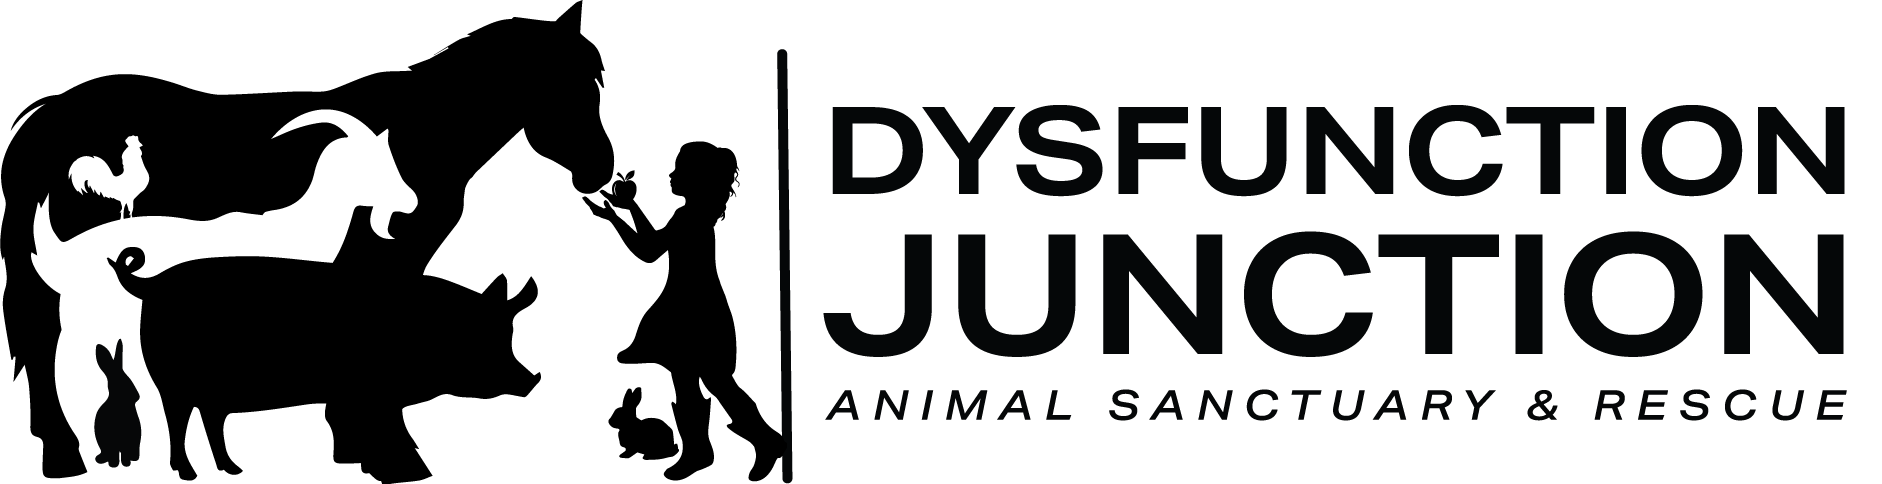 Dysfunction Junction logo